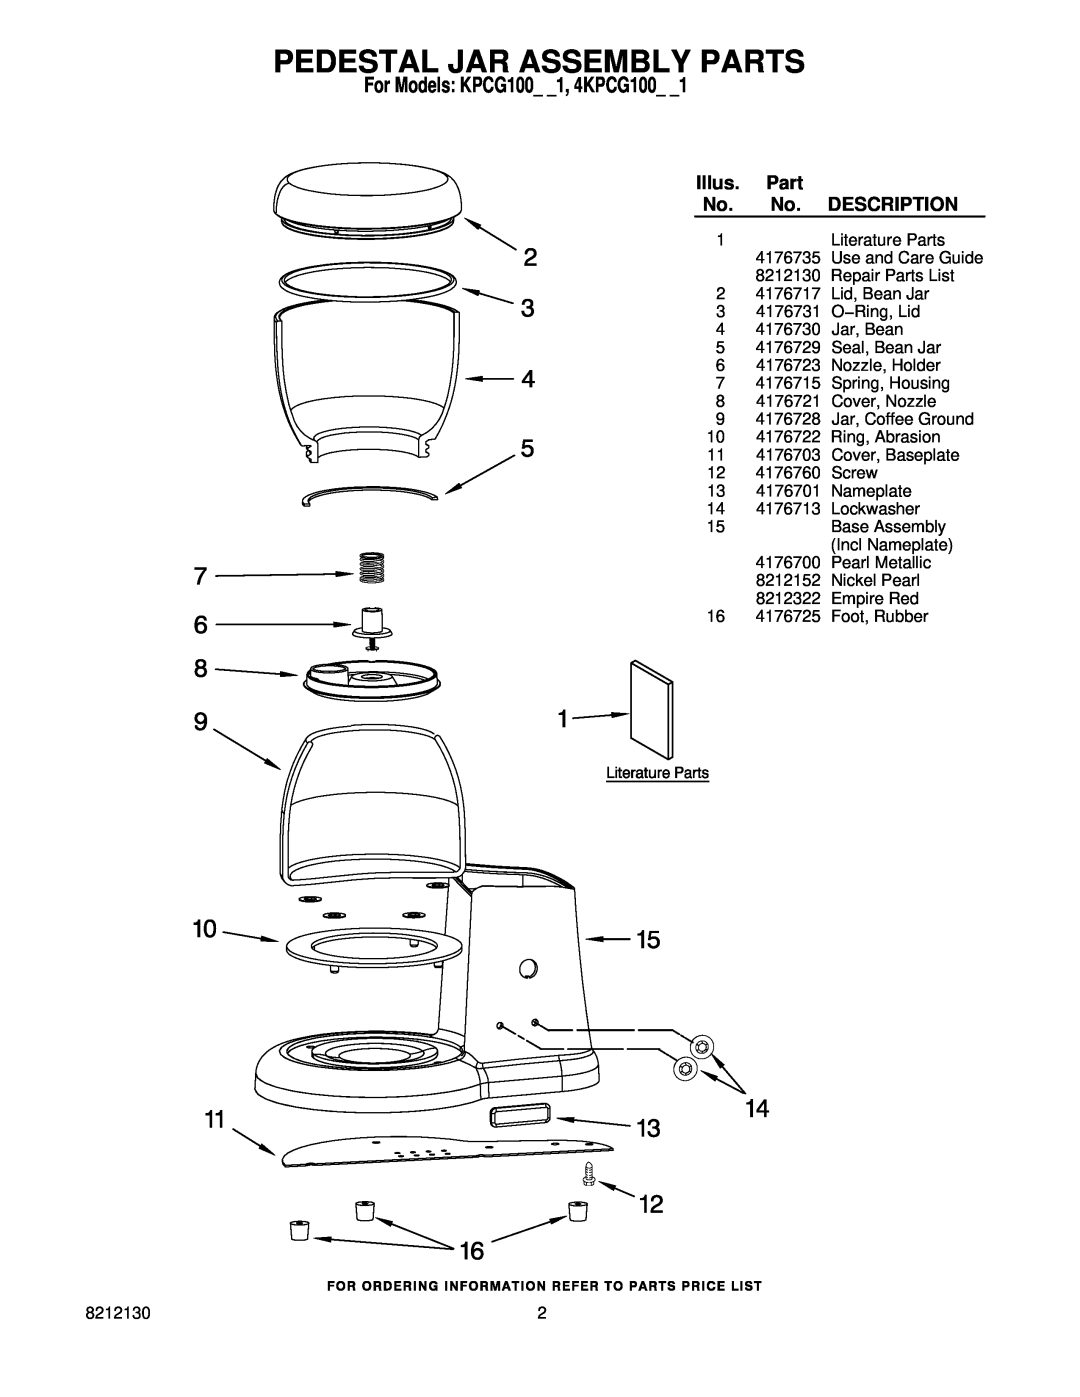 KitchenAid 4KPCG100ER1, KPCG100PM1 manual Pedestal Jar Assembly Parts, For Models KPCG100 1, 4KPCG100, Illus, Description 